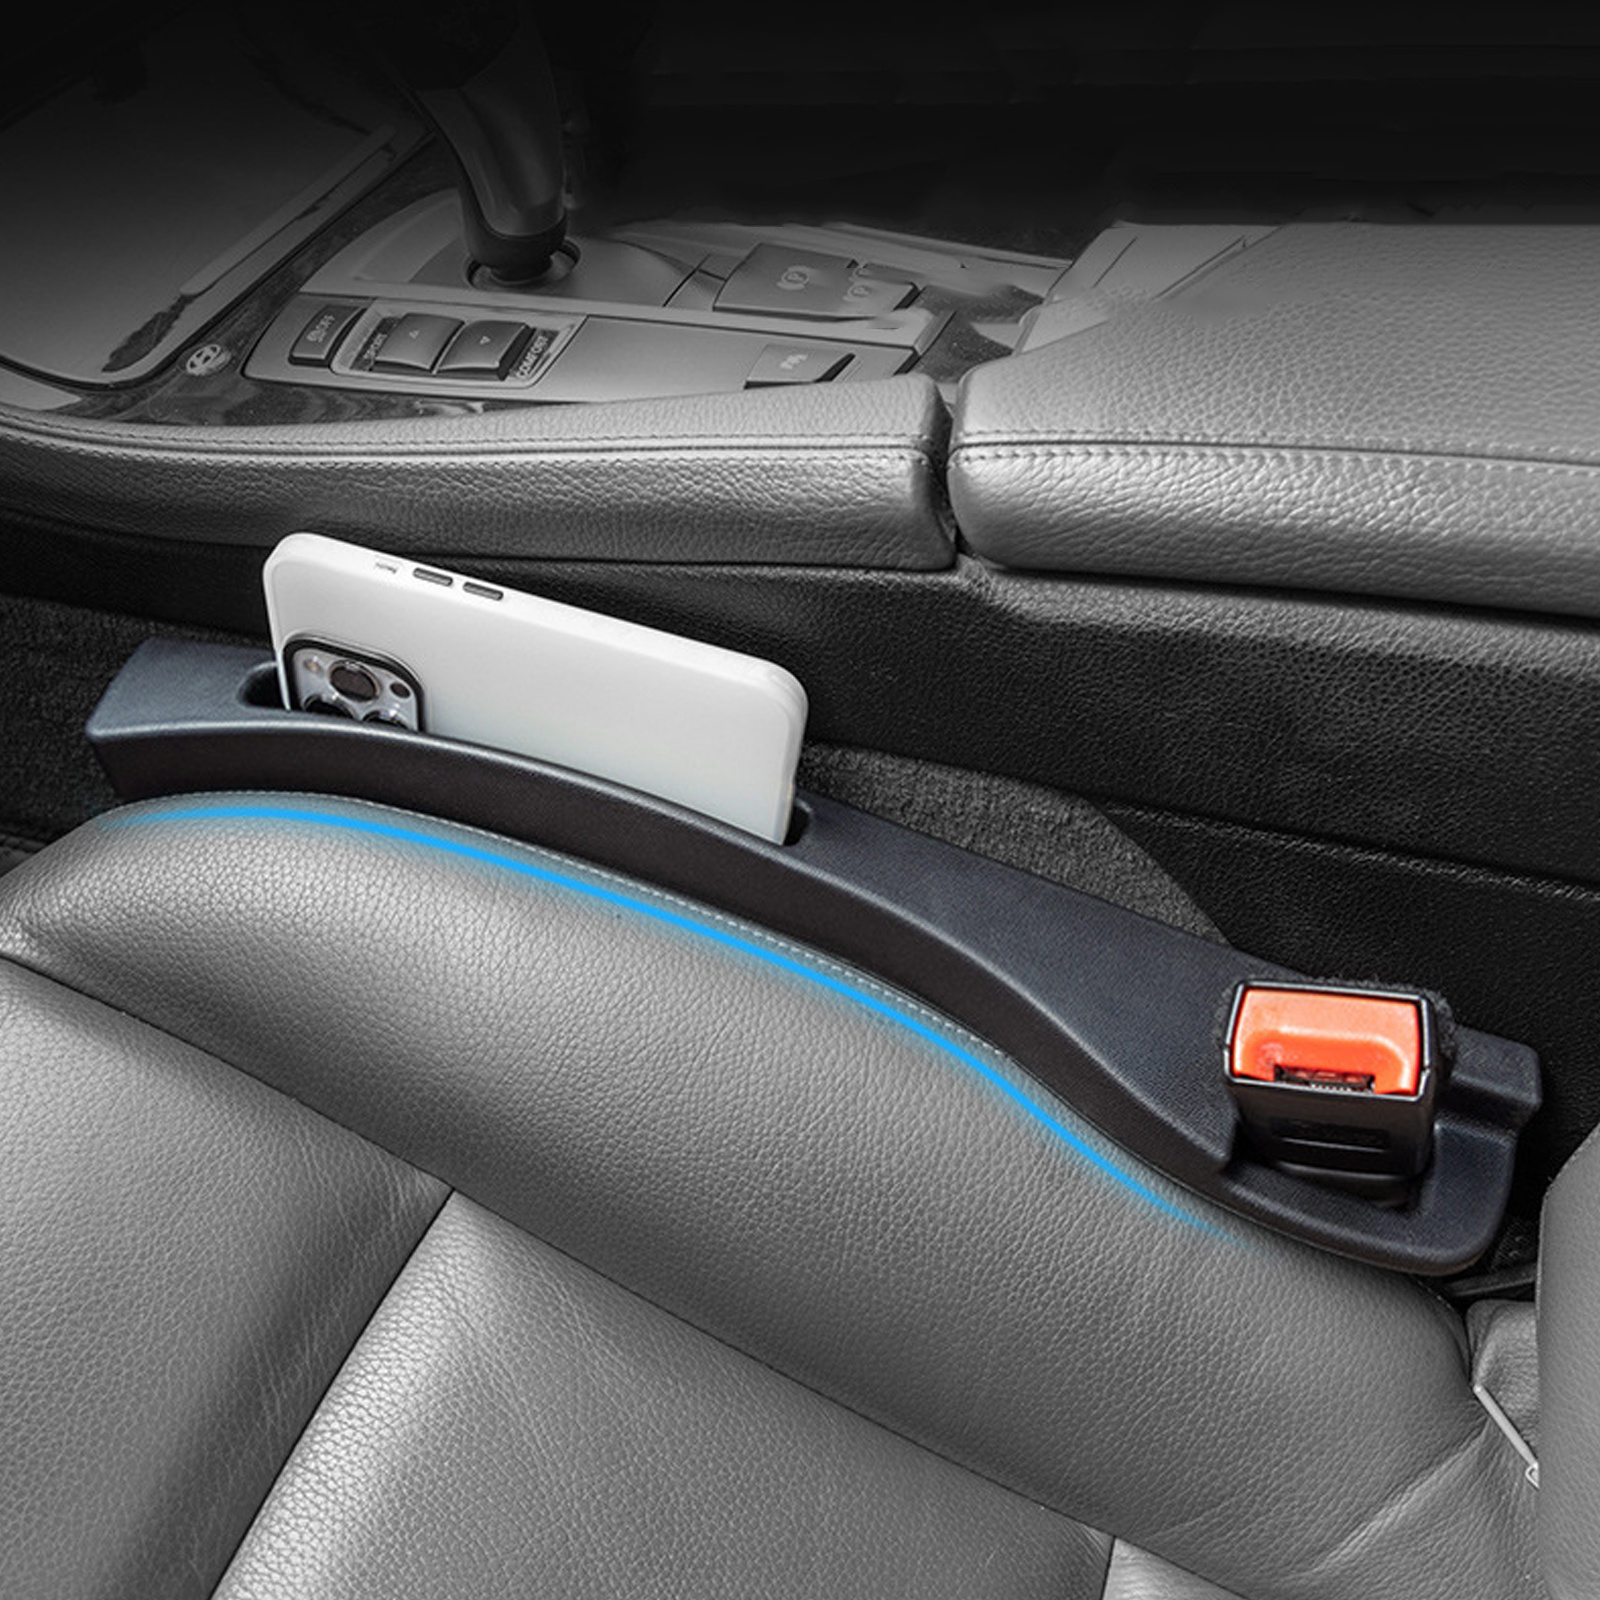 Car Seat Filling Side Seam Plug Strip Leak proof - Temu United Kingdom